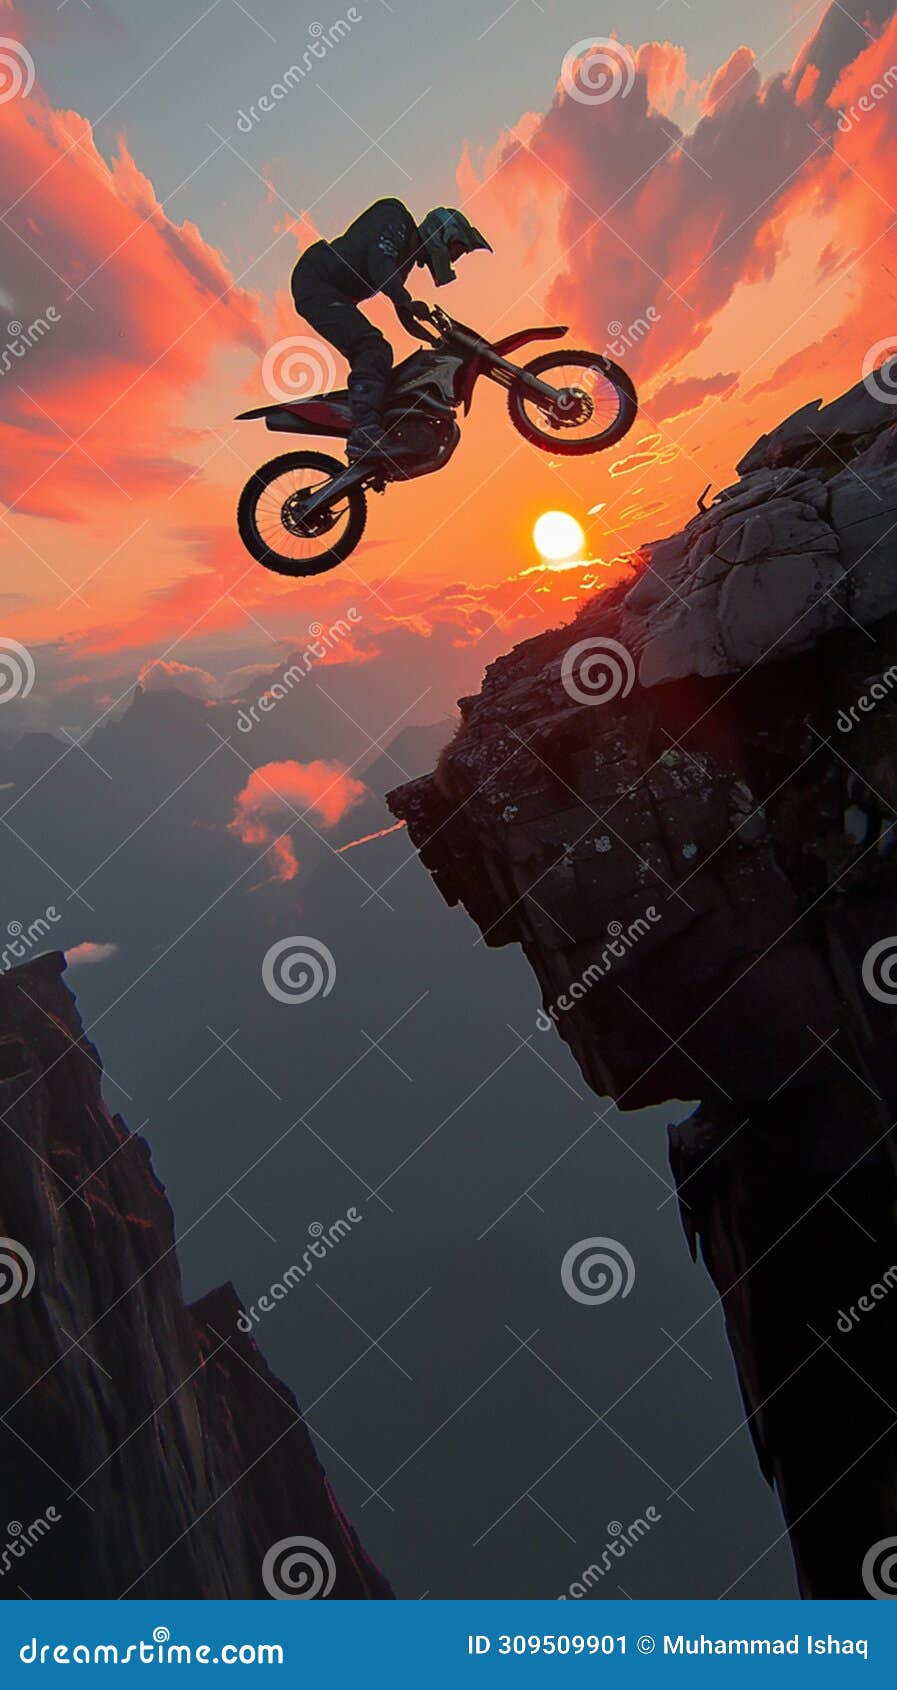 daring mountain feat motorbike rider performs sunset stunt on rocky slope